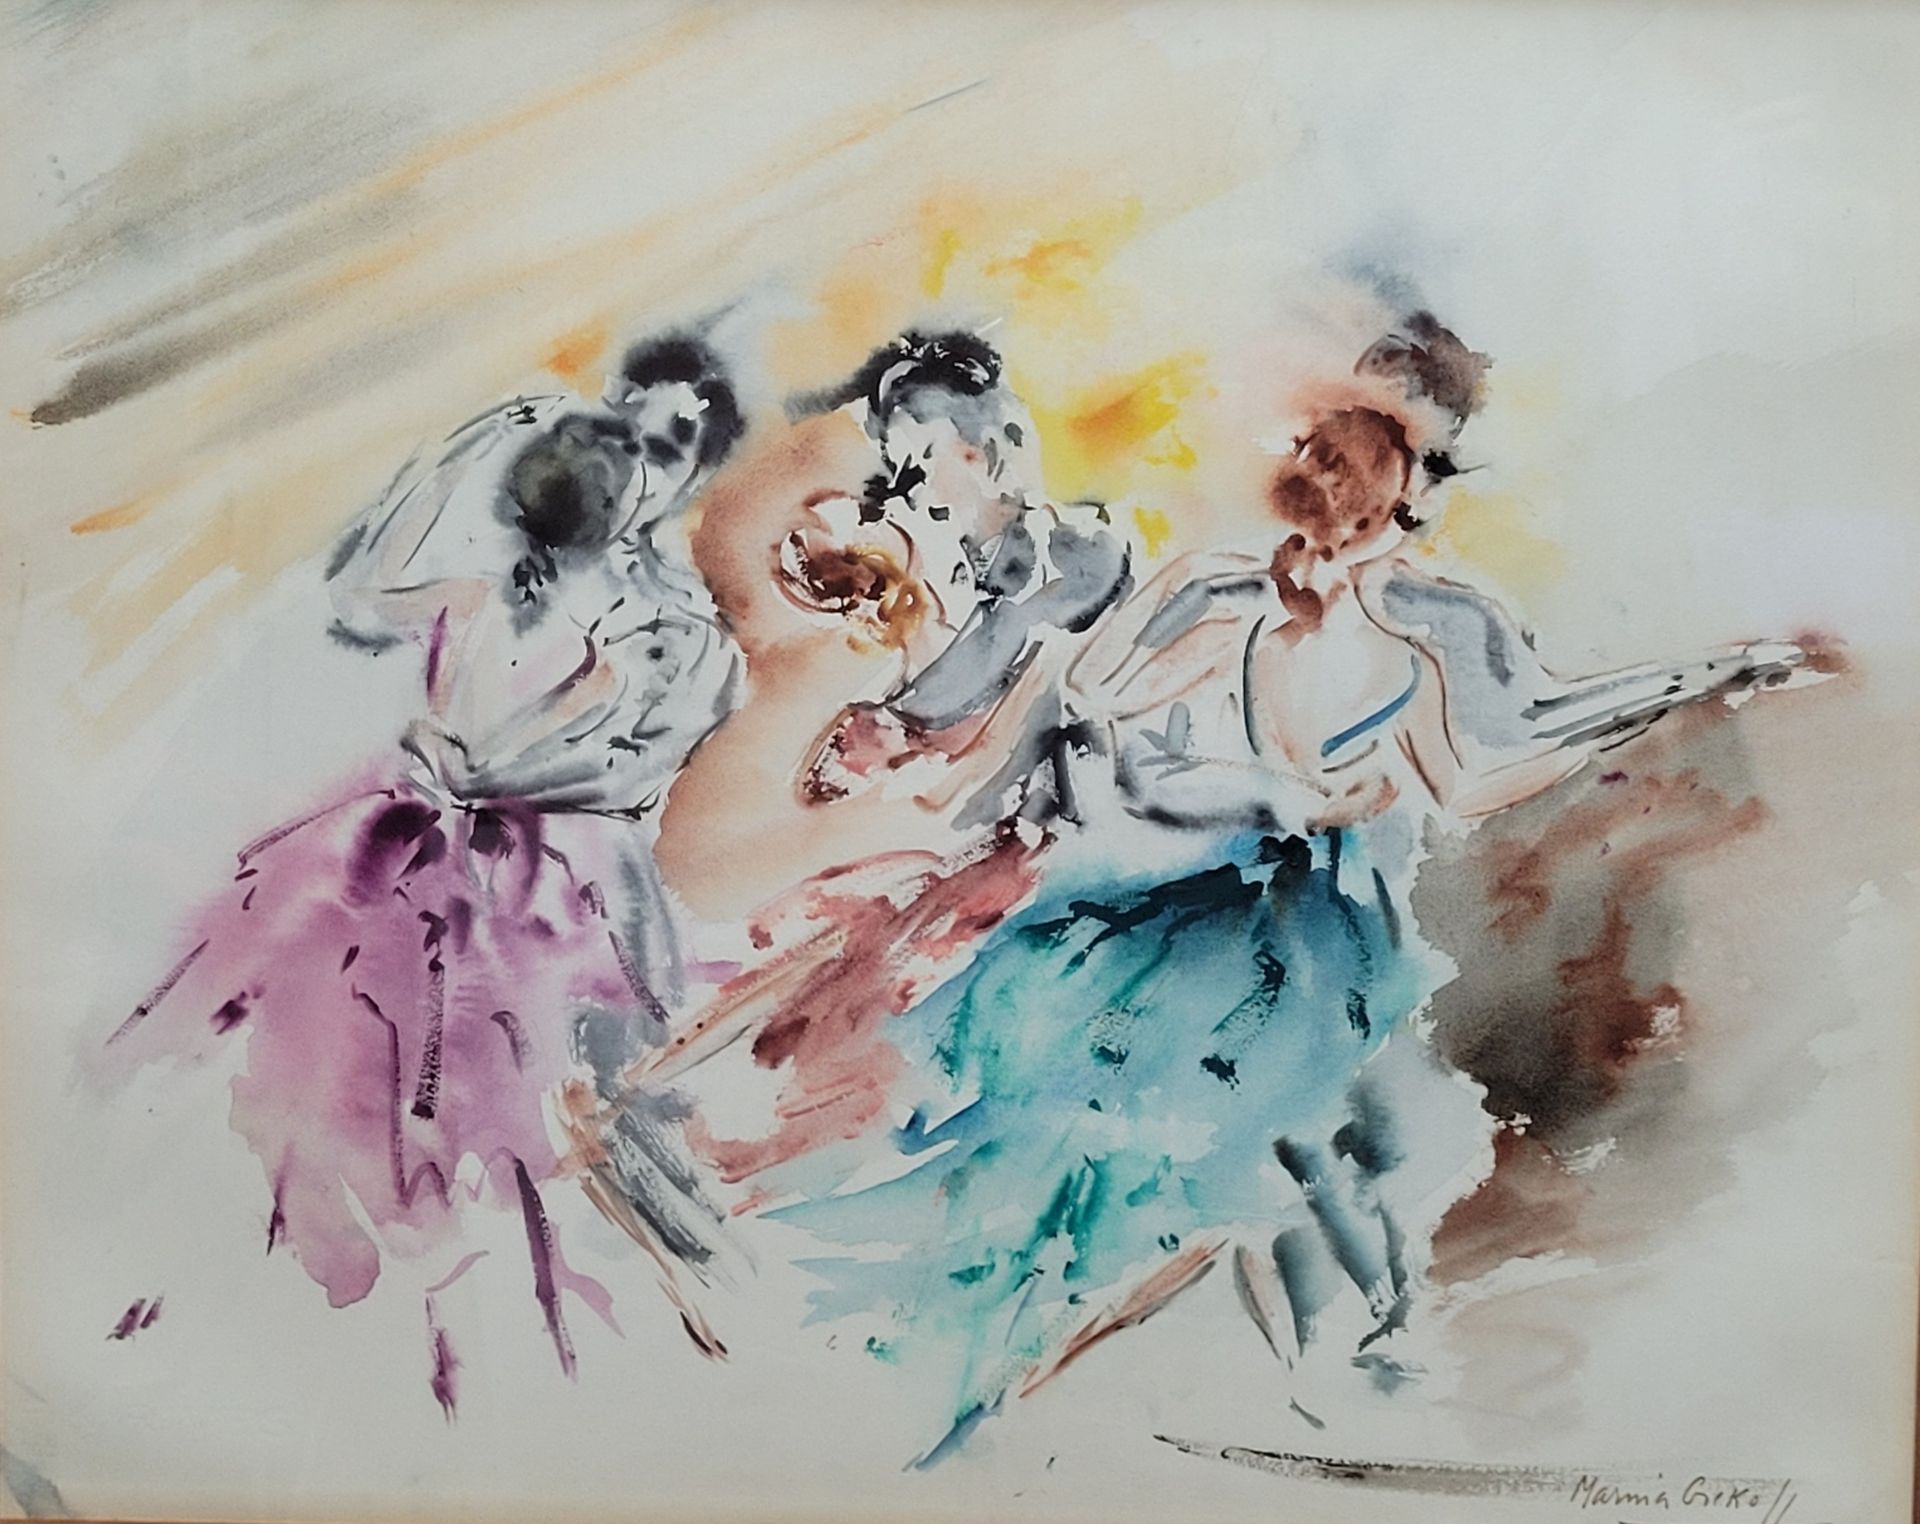 Null (E) 玛丽娜-格雷科夫(1918-2009)

舞蹈现场

水彩画，已签名

69 x 59 厘米